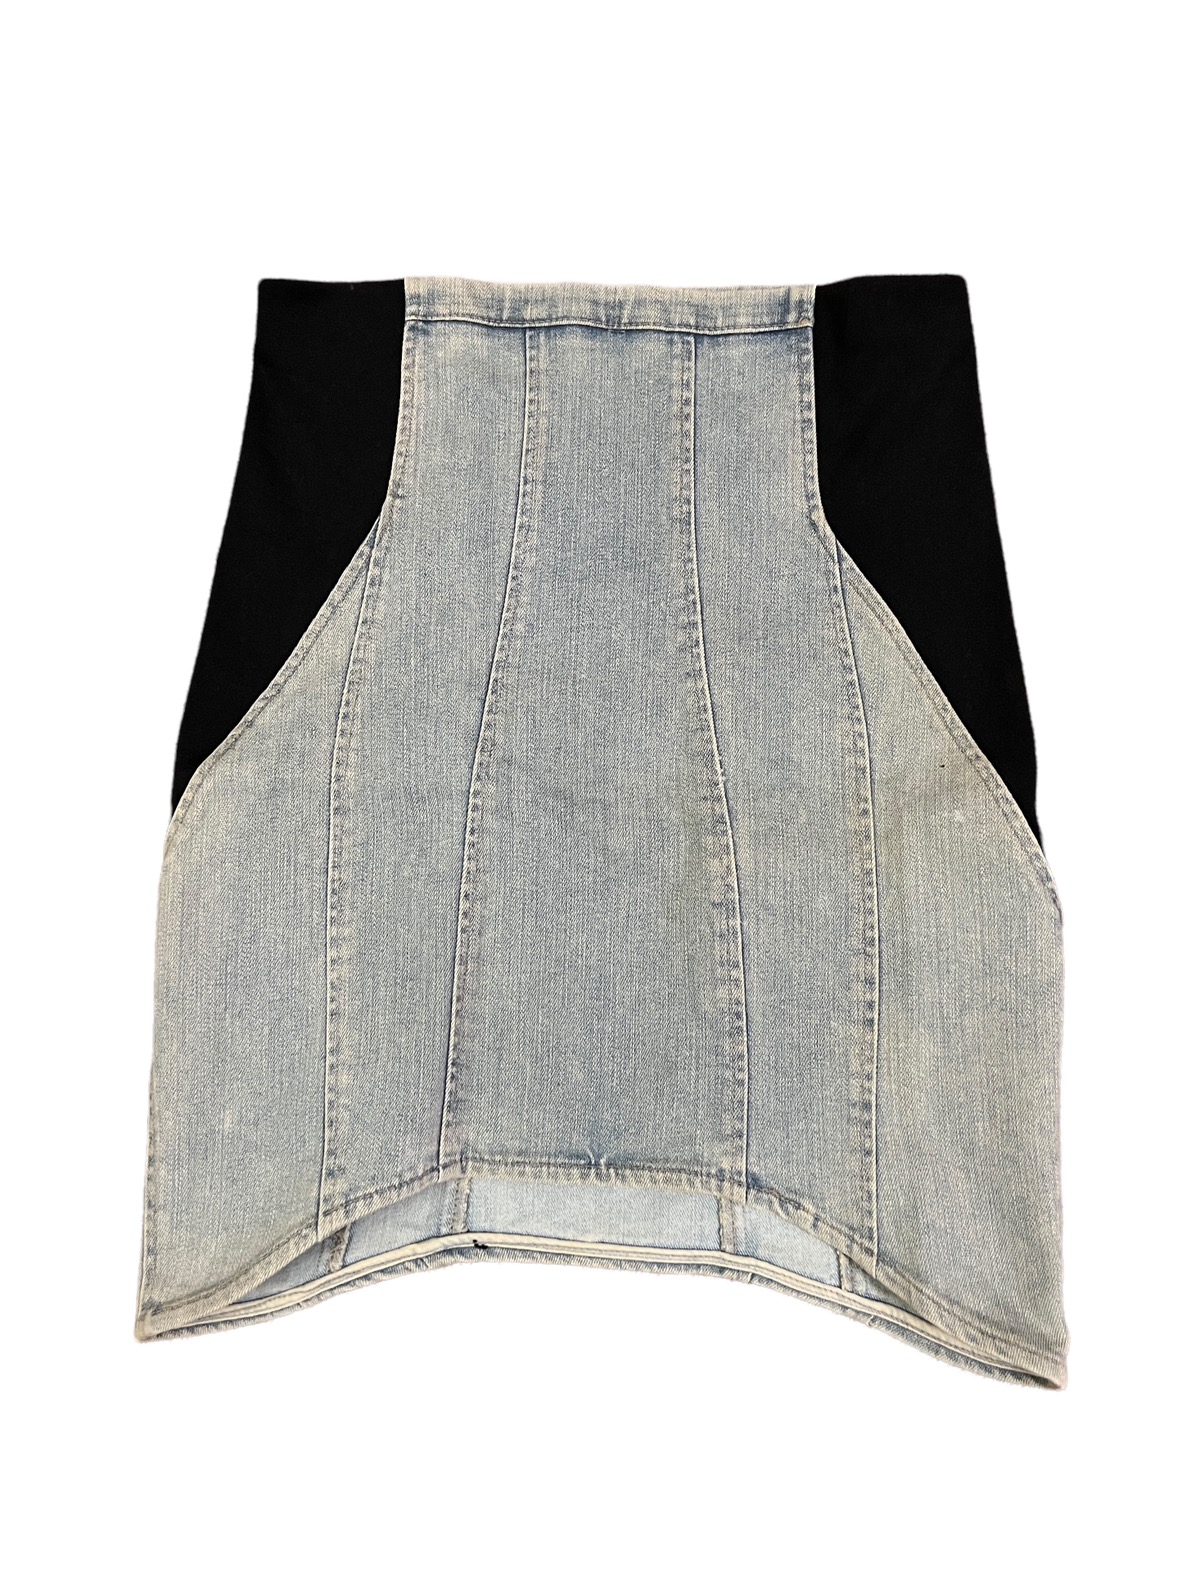 Vintage Helmut Lang Black/Distressed Jeans Mini Skirt - 1